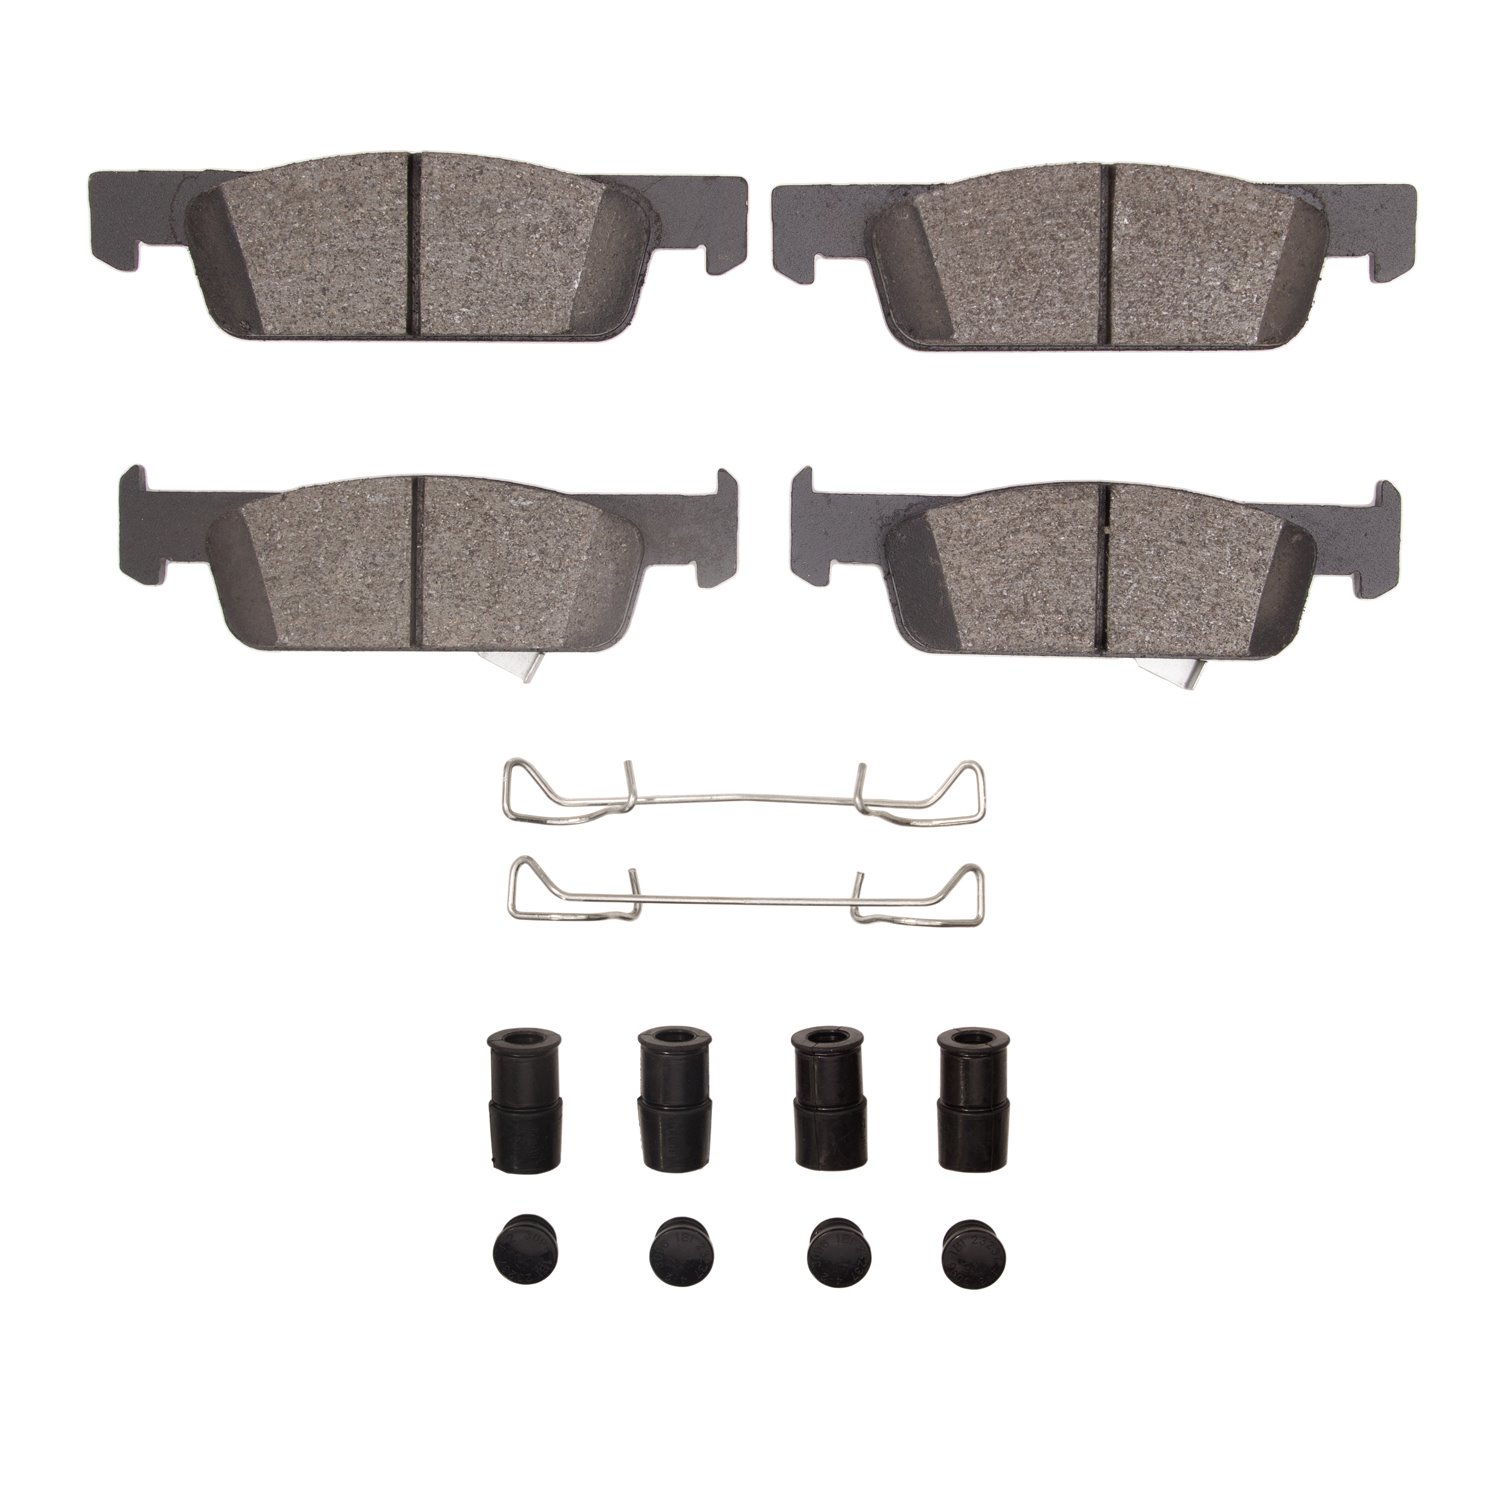 1600-1955-01 5000 Euro Ceramic Brake Pads & Hardware Kit, 2016-2019 Smart, Position: Front